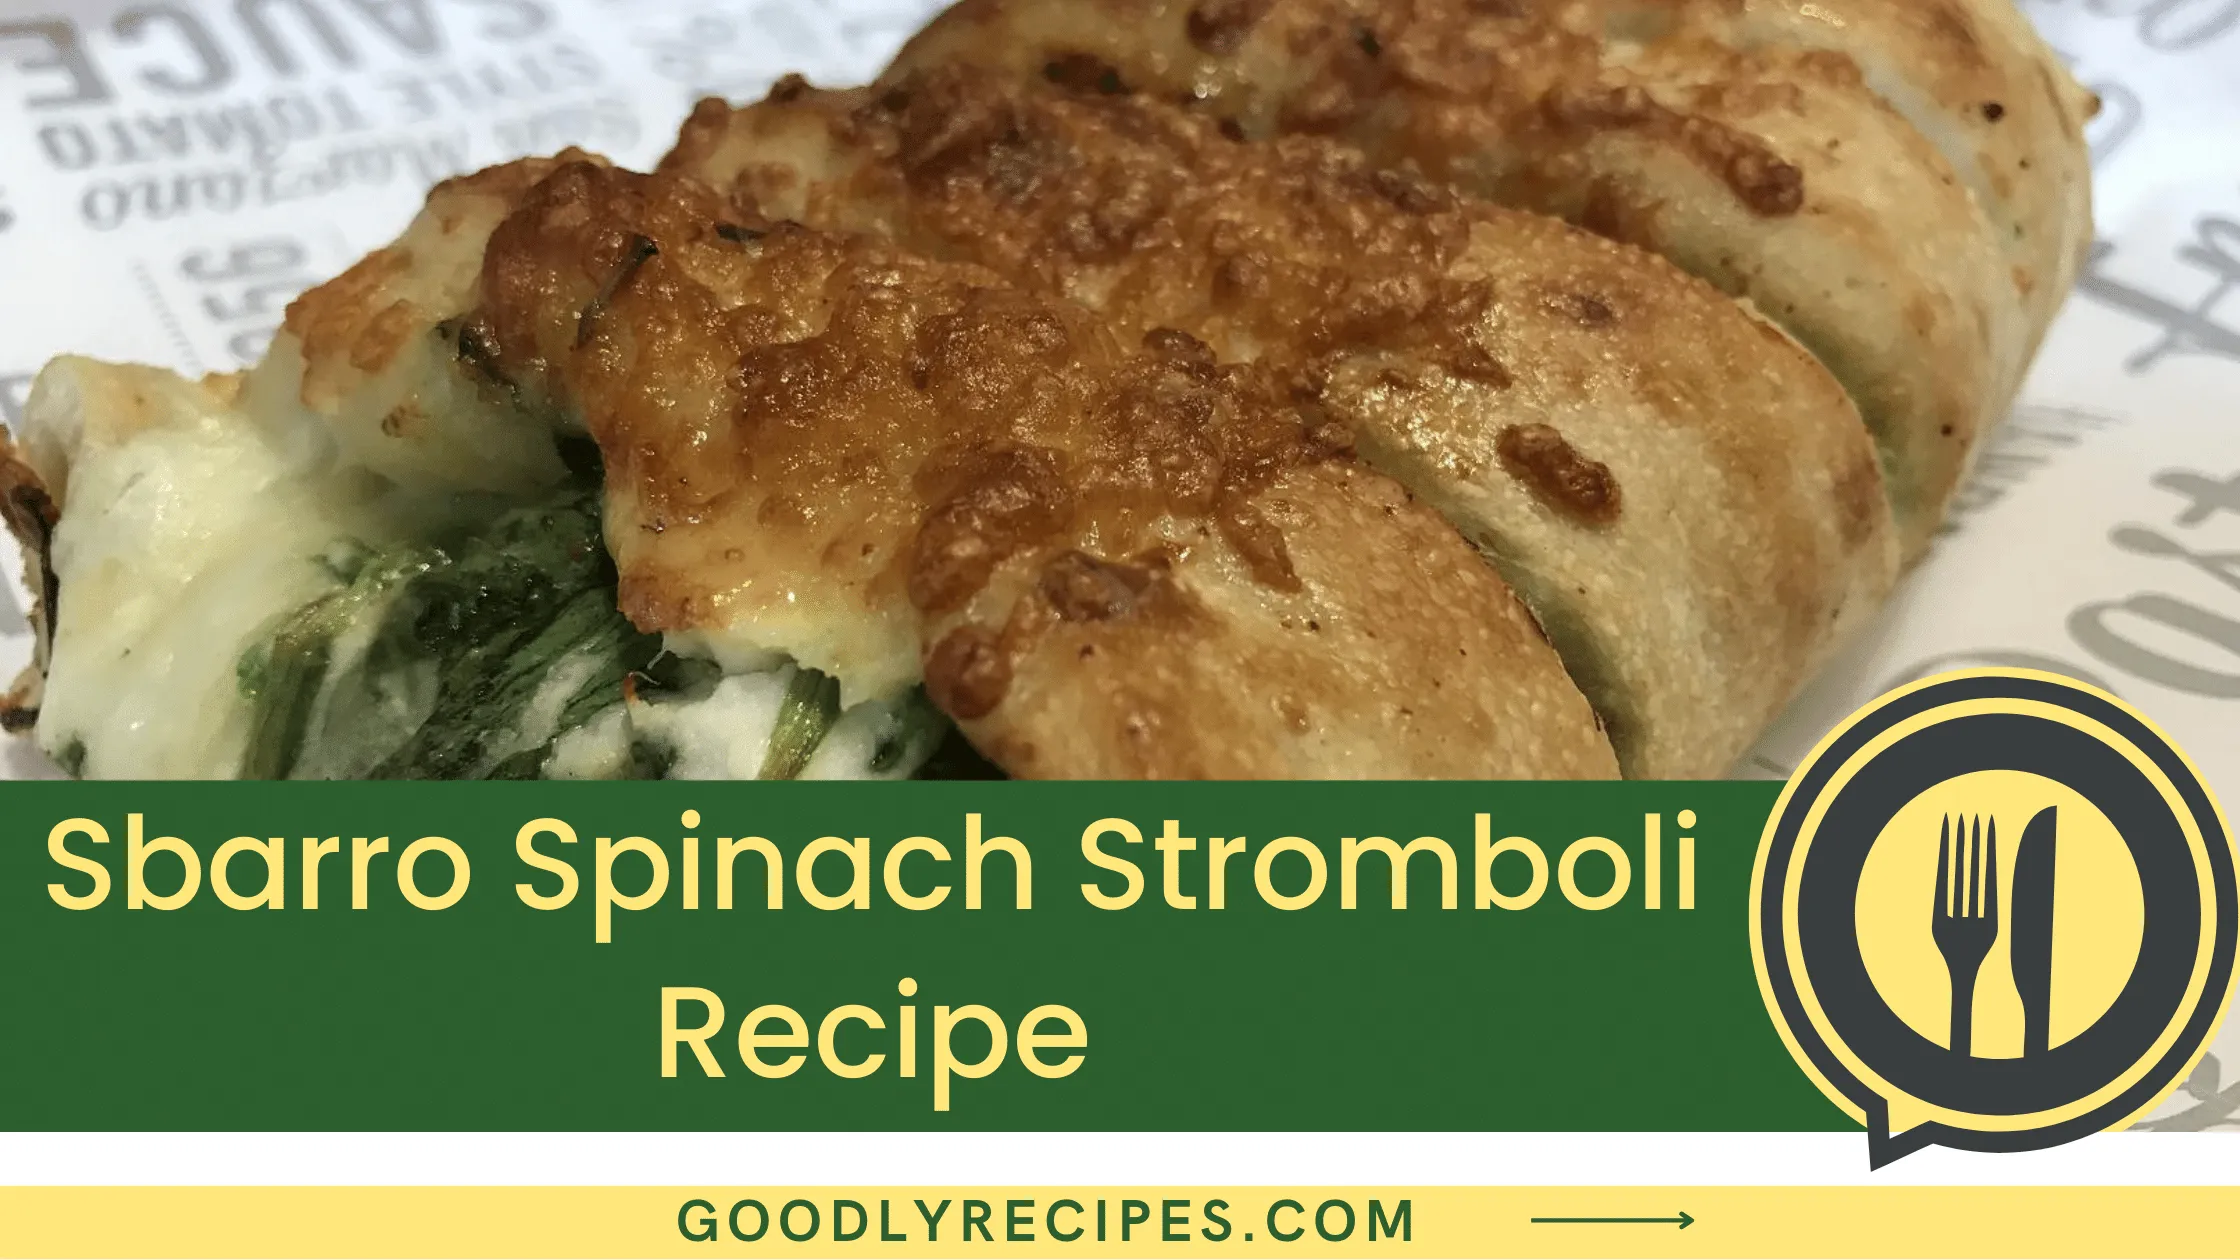 Sbarro Spinach Stromboli Recipe - For Food Lovers